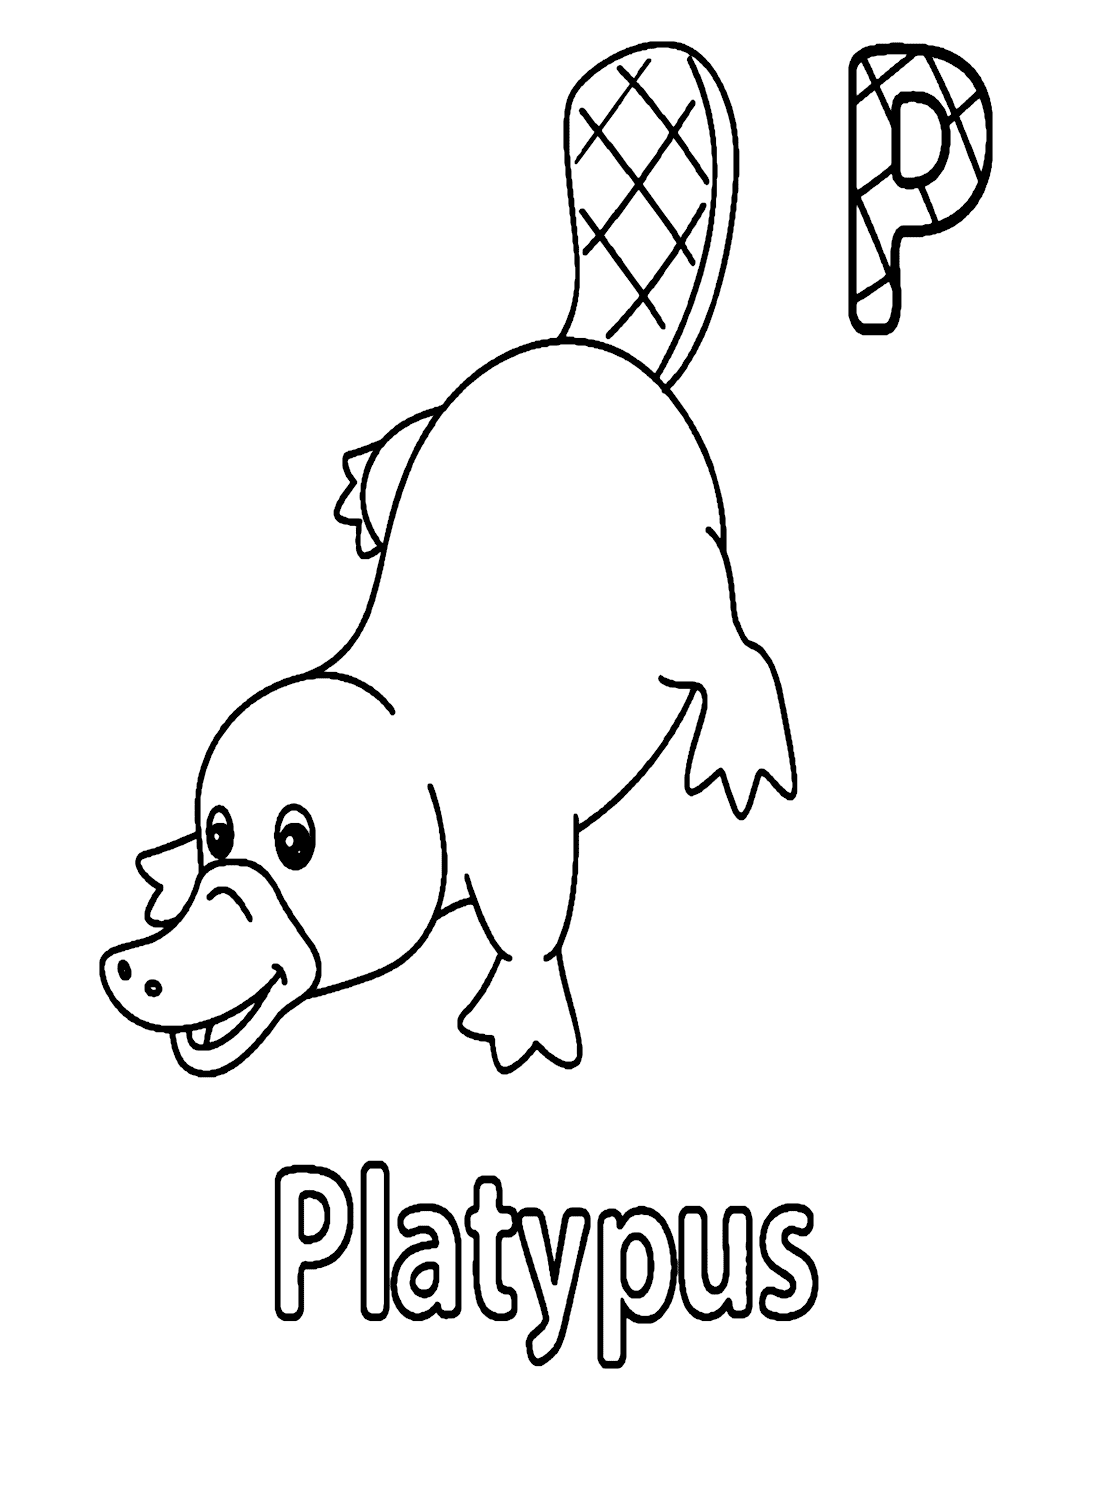 Буква P для утконоса от Platypus